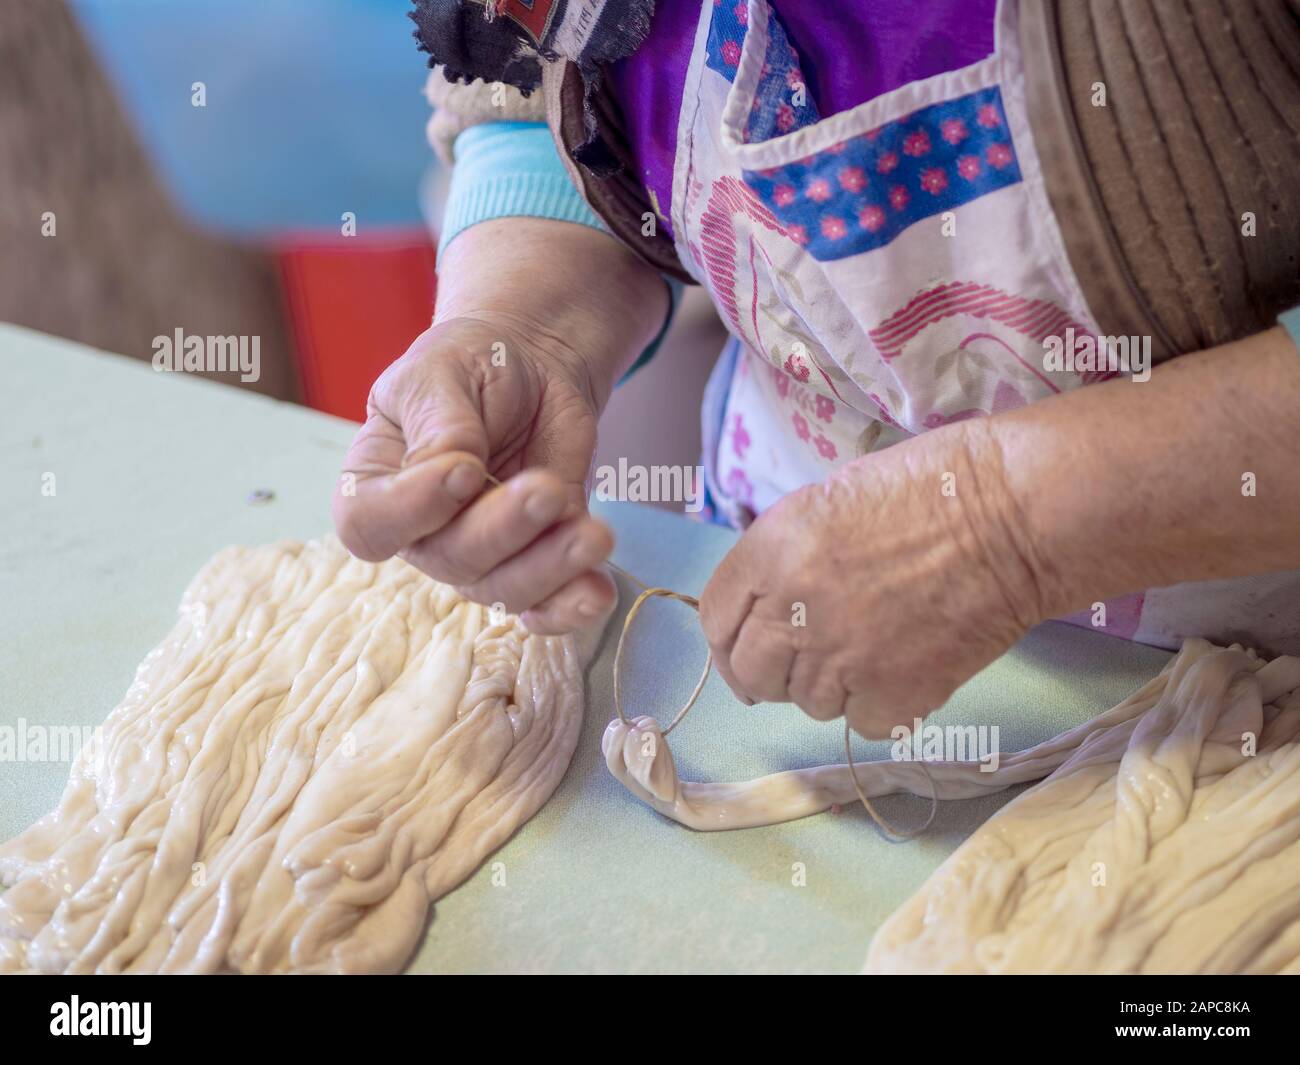 Woman making traditional pork sausage skins using pig intestines. Rustic, rural Italy. Genuine farm production. Stock Photo